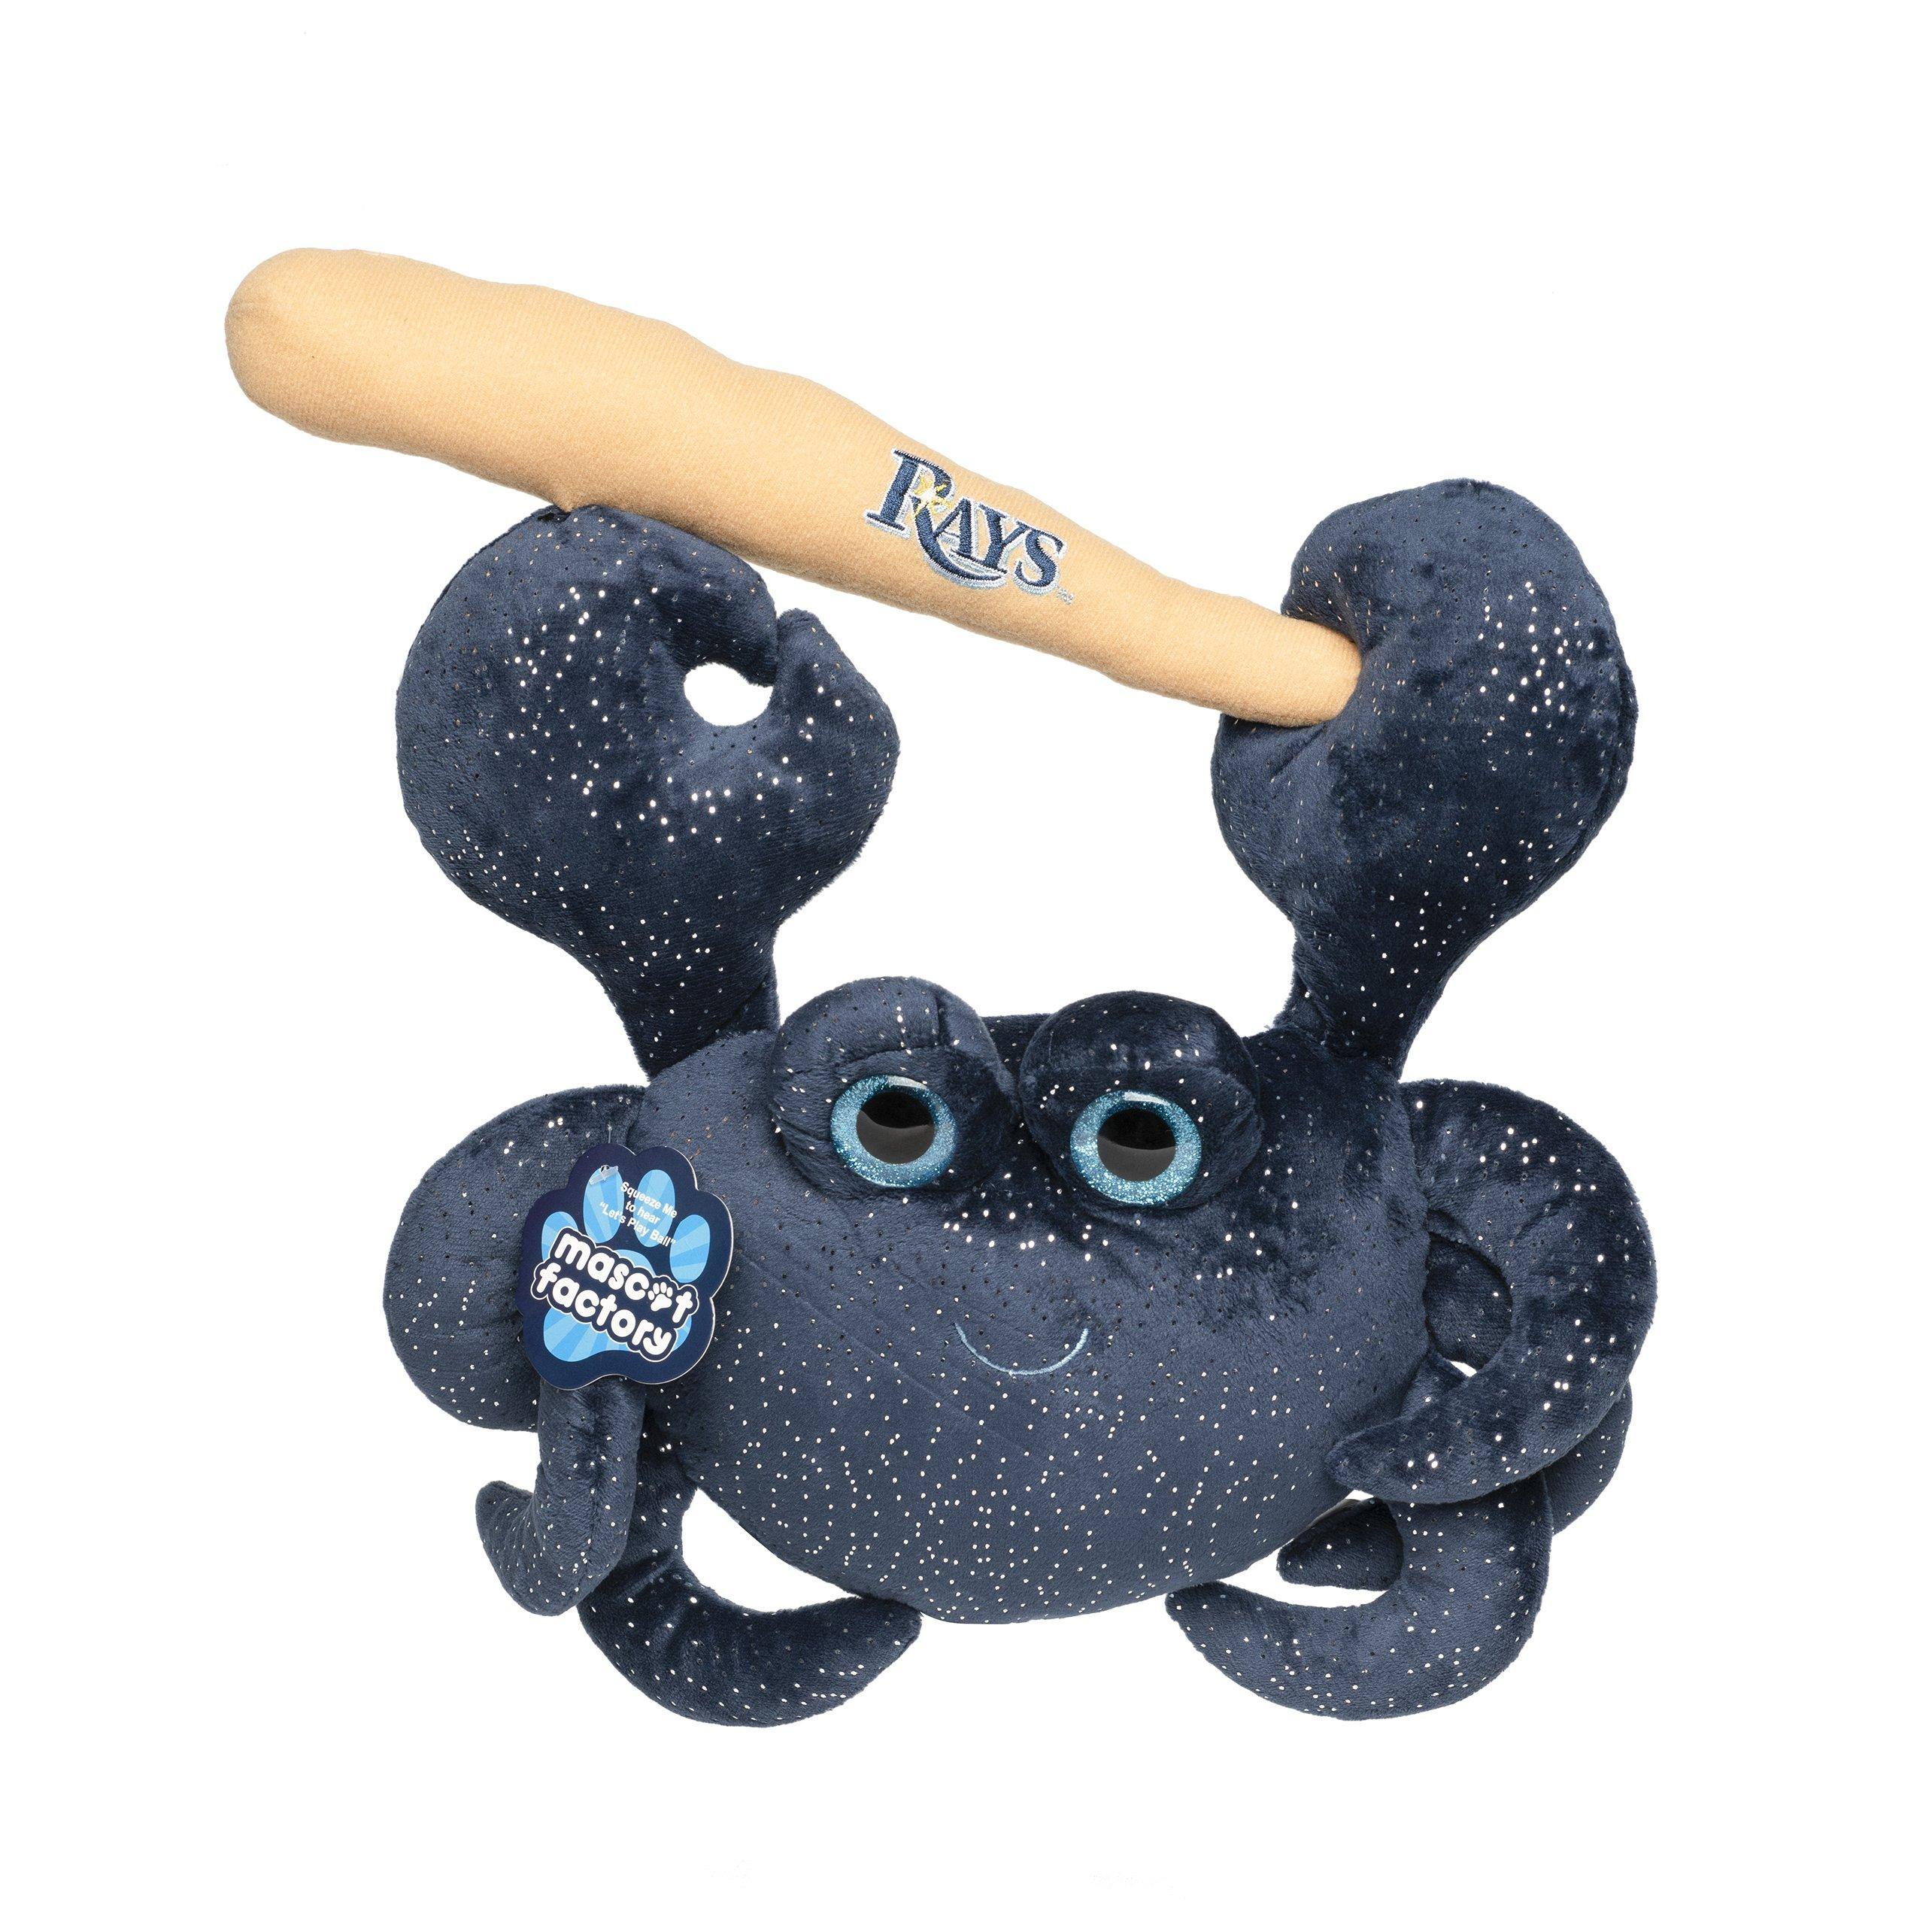 Rays Navy Crab with Bat Plush Toy